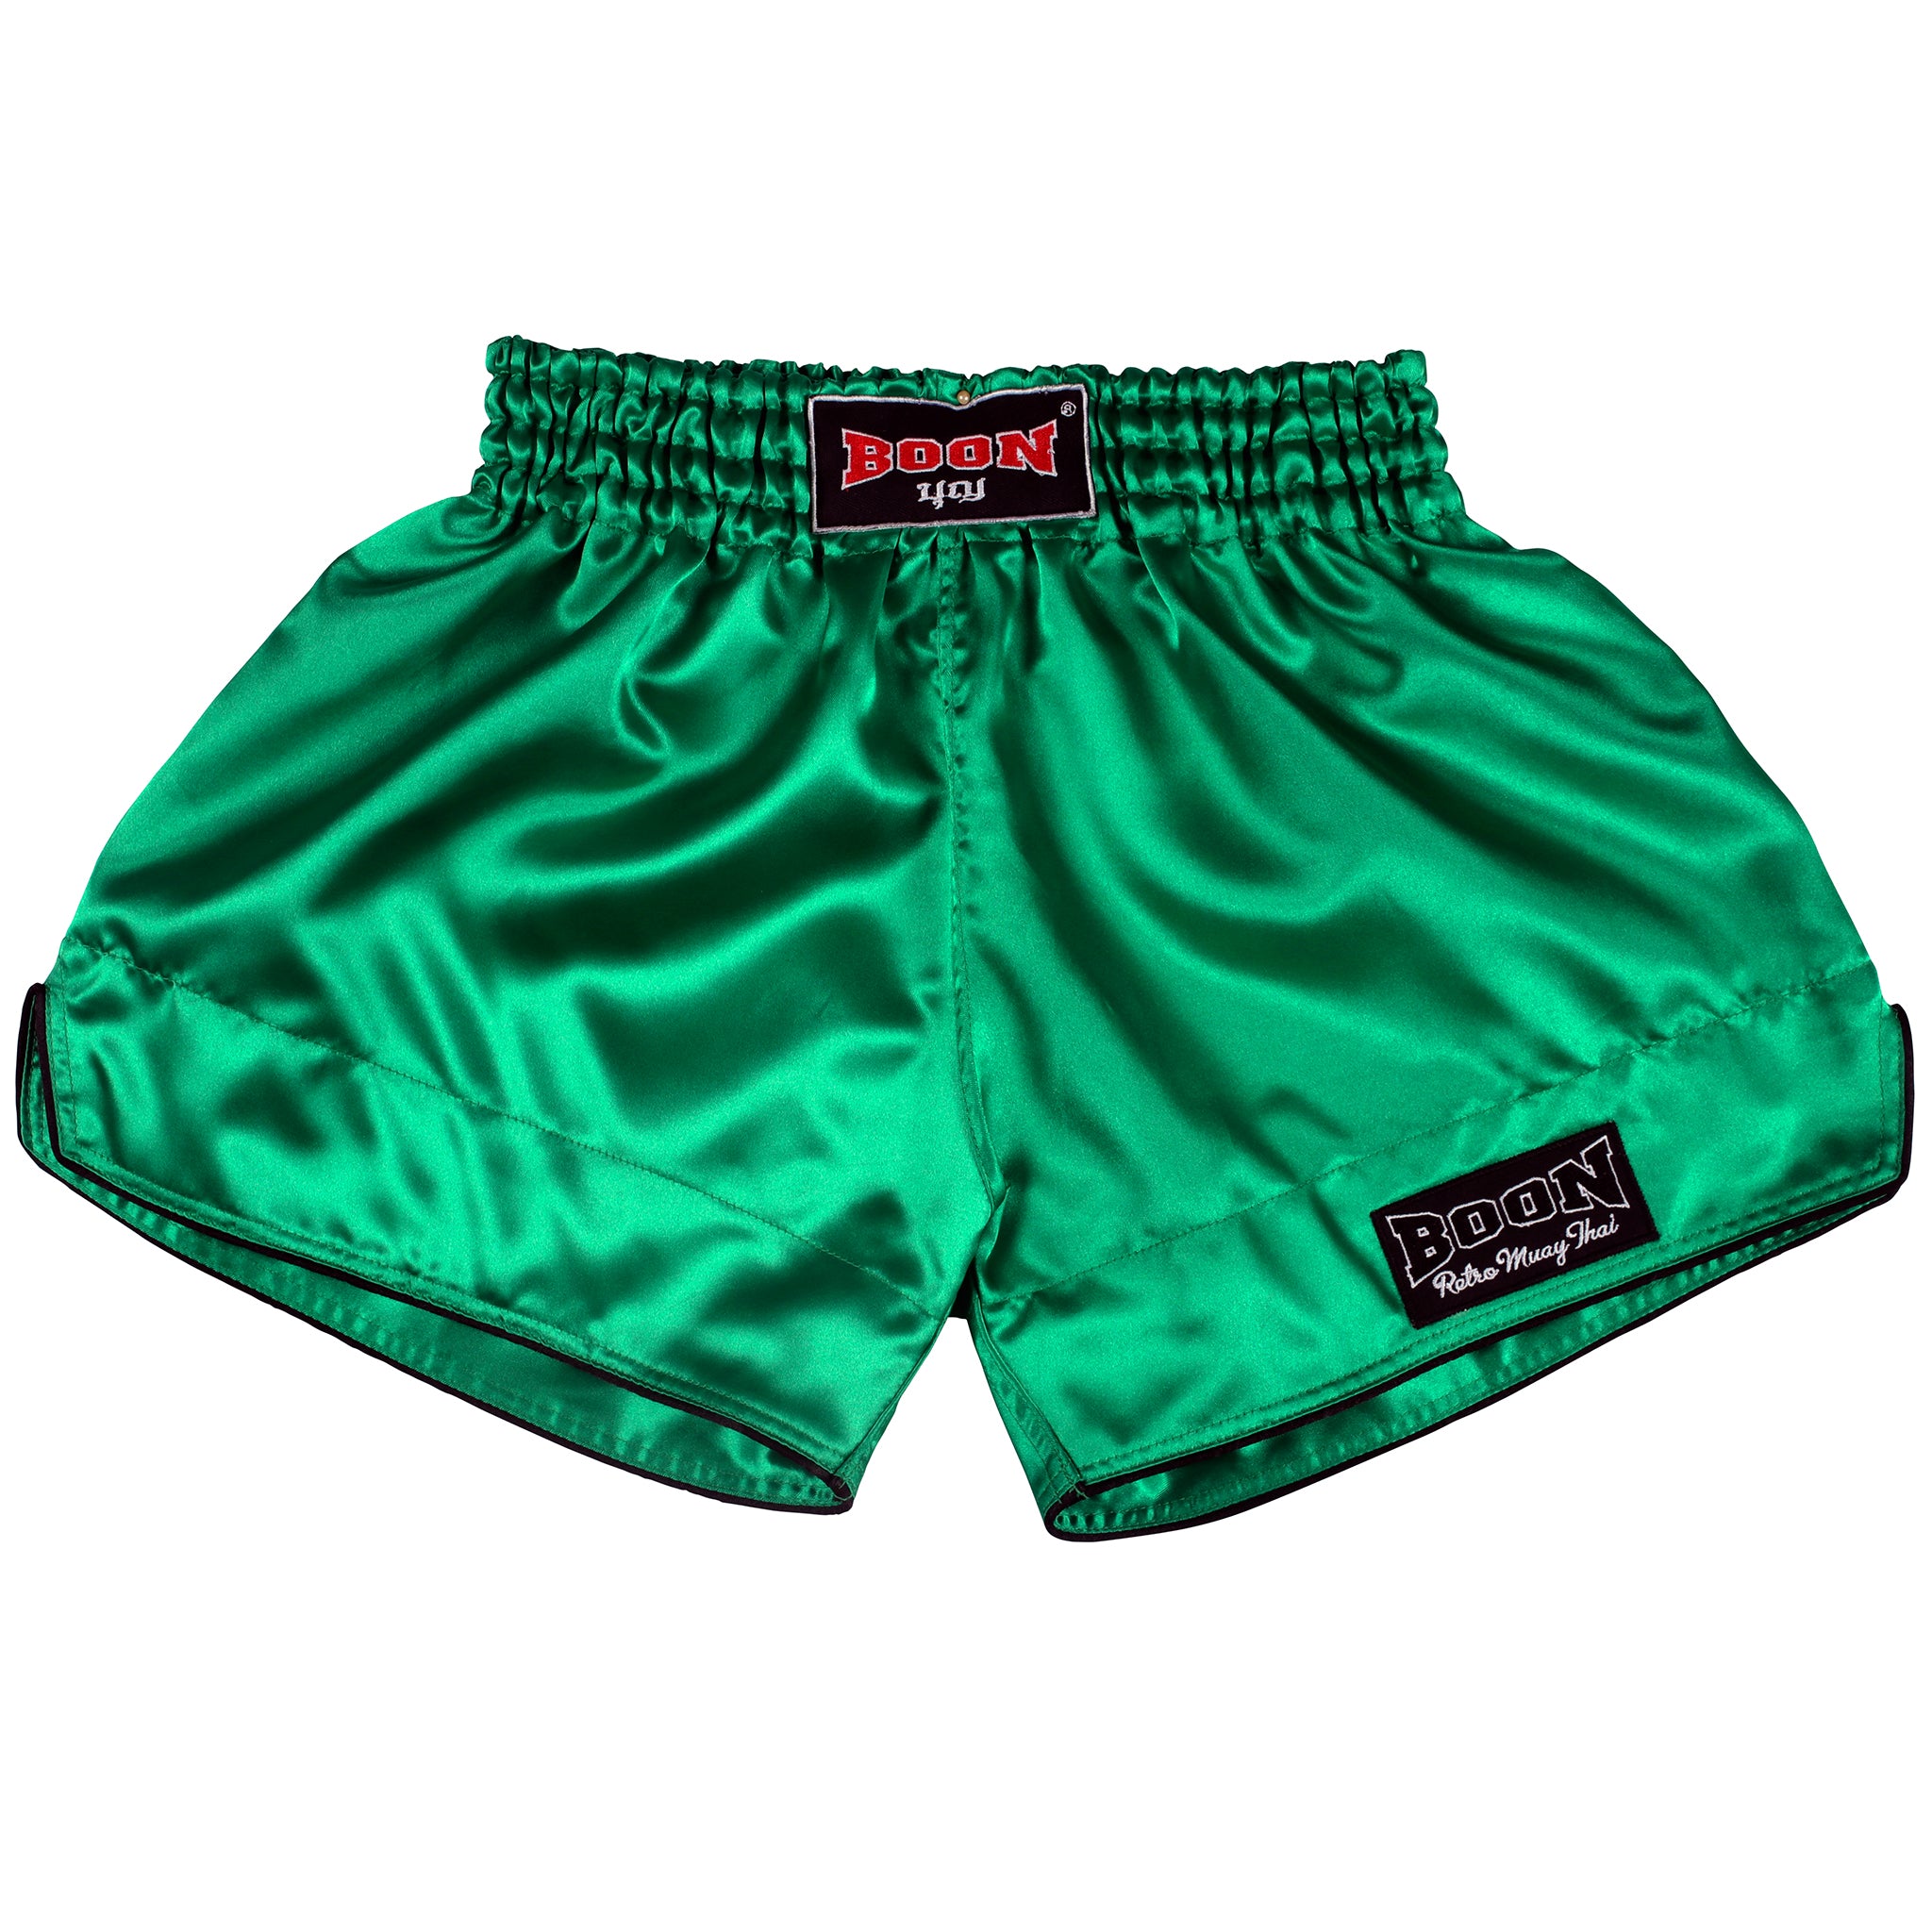 The Vintage Green Boxer Briefs